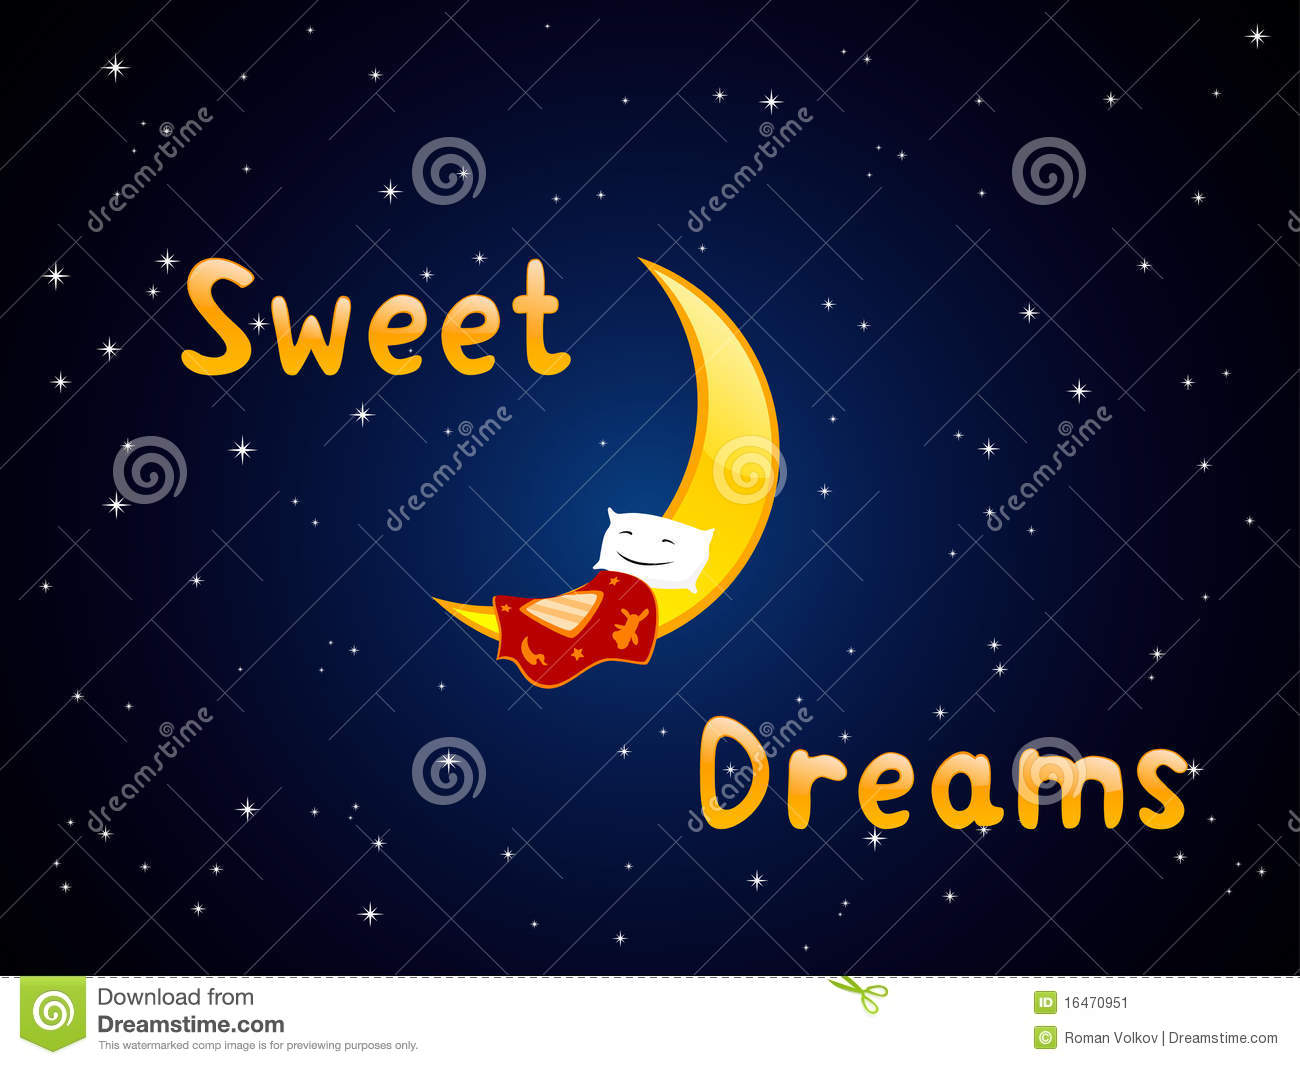 Sweet Dreams Stock Image   Image  16470951